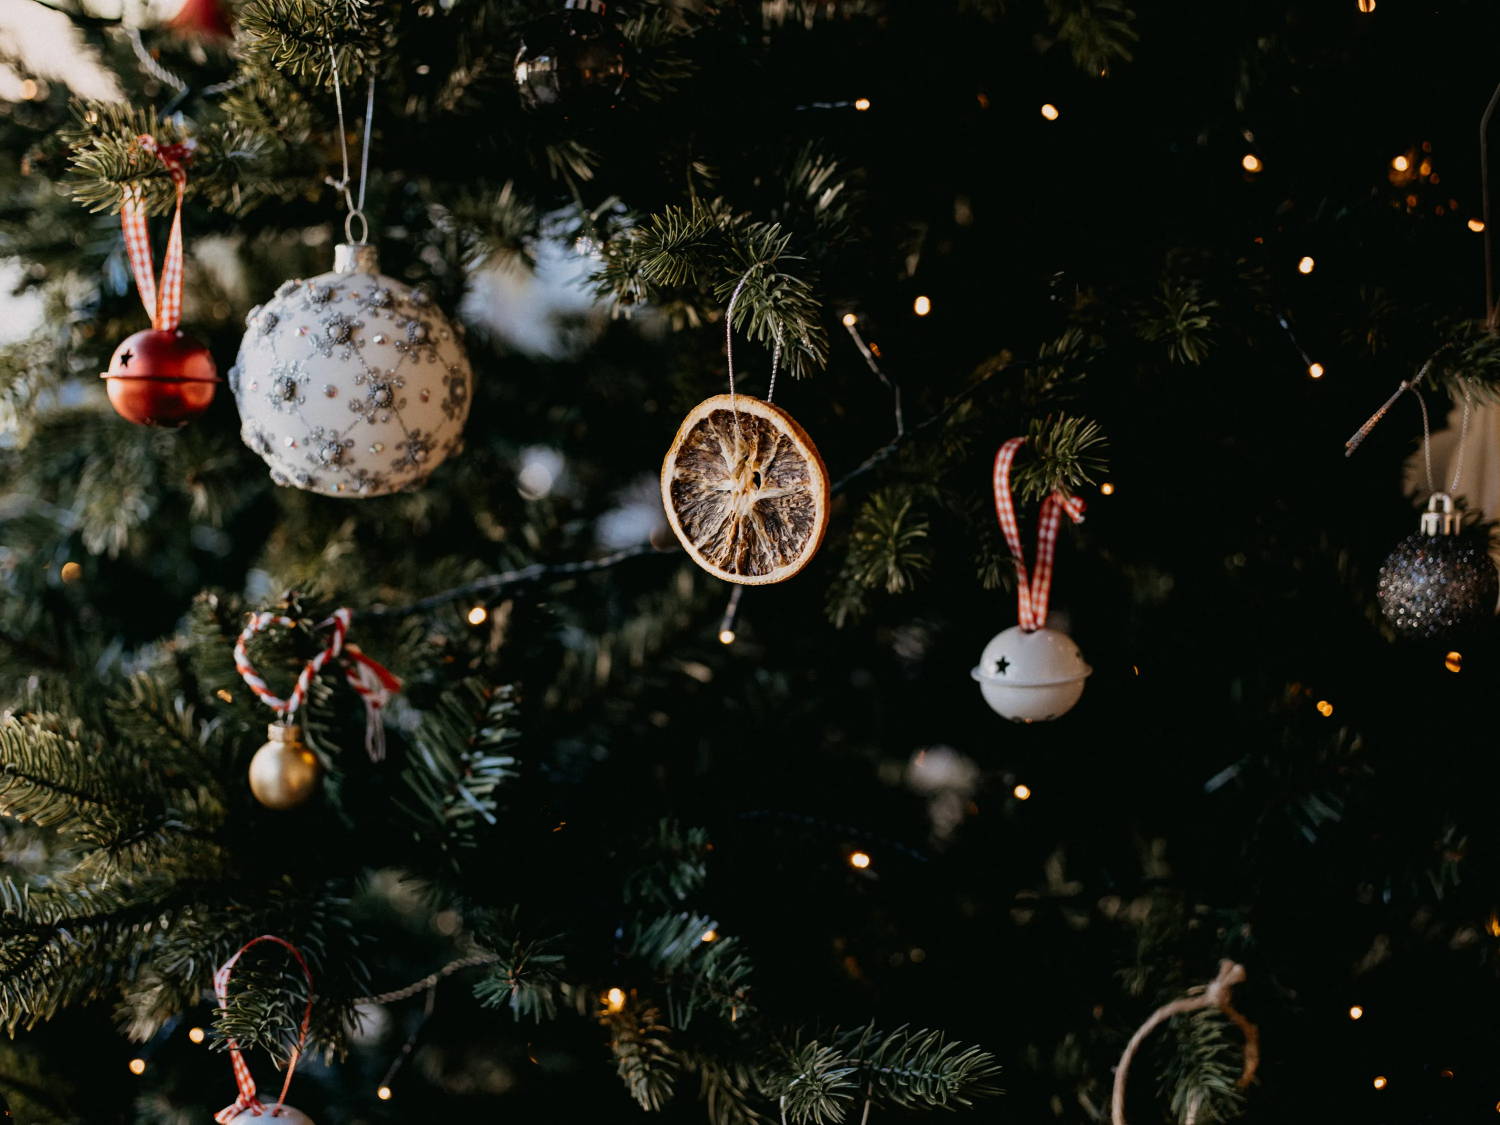 Closeup of ornaments on a Christmas tree